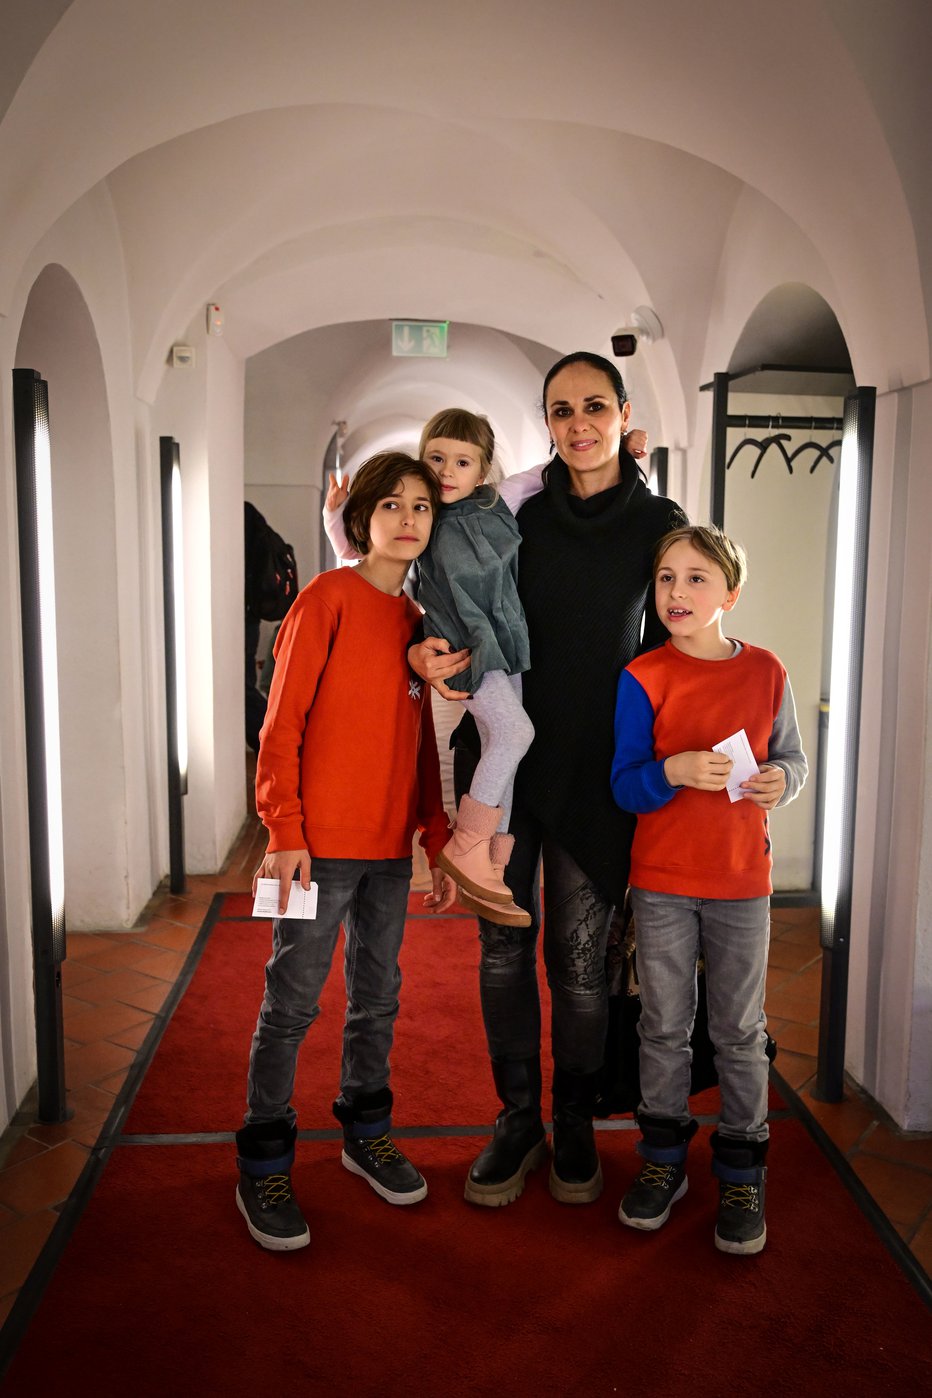 Fotografija: Lejka Festić Britovšek, lastnica optike ArmaAxa, je na otroško premiero Mačka Murija pripeljala vse tri otroke. FOTOGRAFIJE: MP PRODUKCIJA/PIGAC.SI
